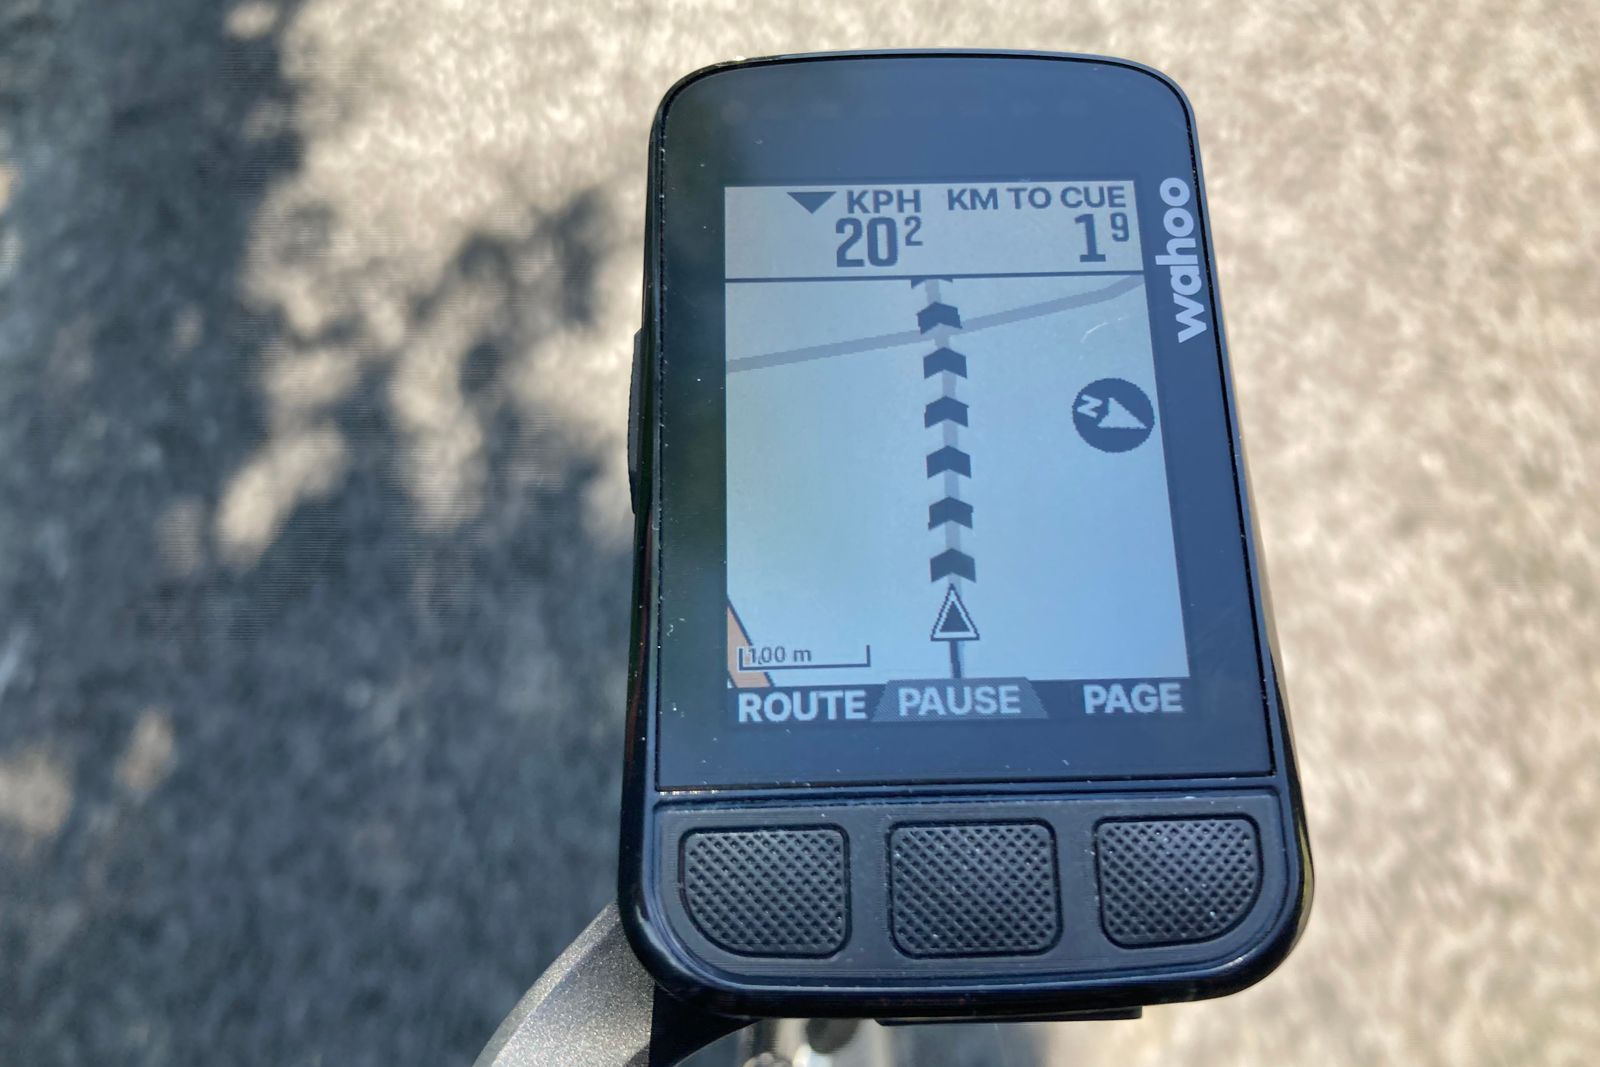 CONJUNTO DE ORDENADOR PARA BICICLETA ELEMNT BOLT GPS